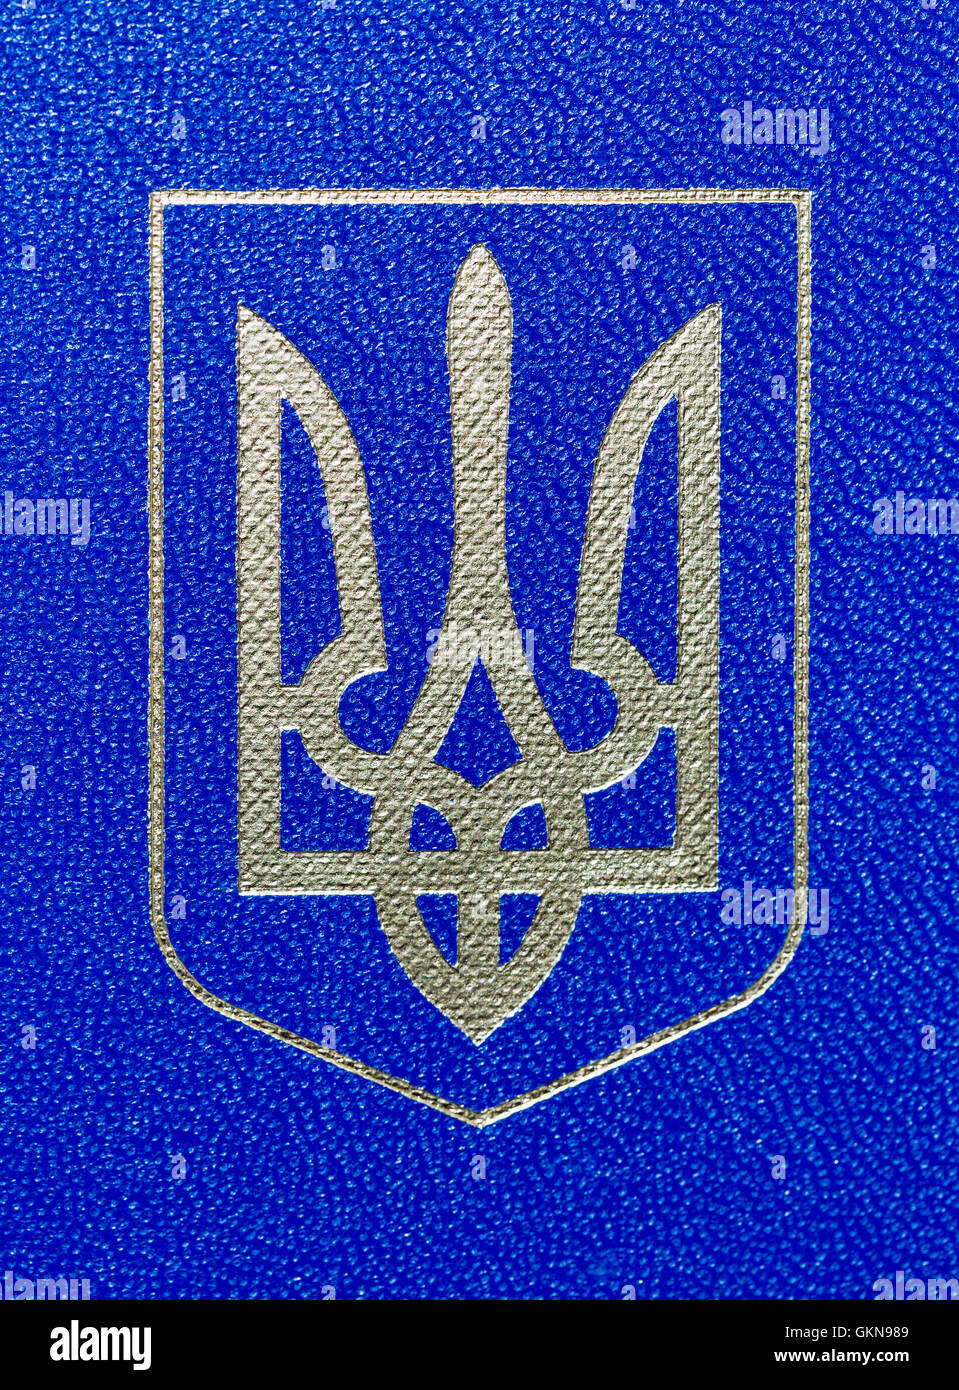 Ukrainische kleine Wappen Makro auf Reisepass-cover Stockfoto